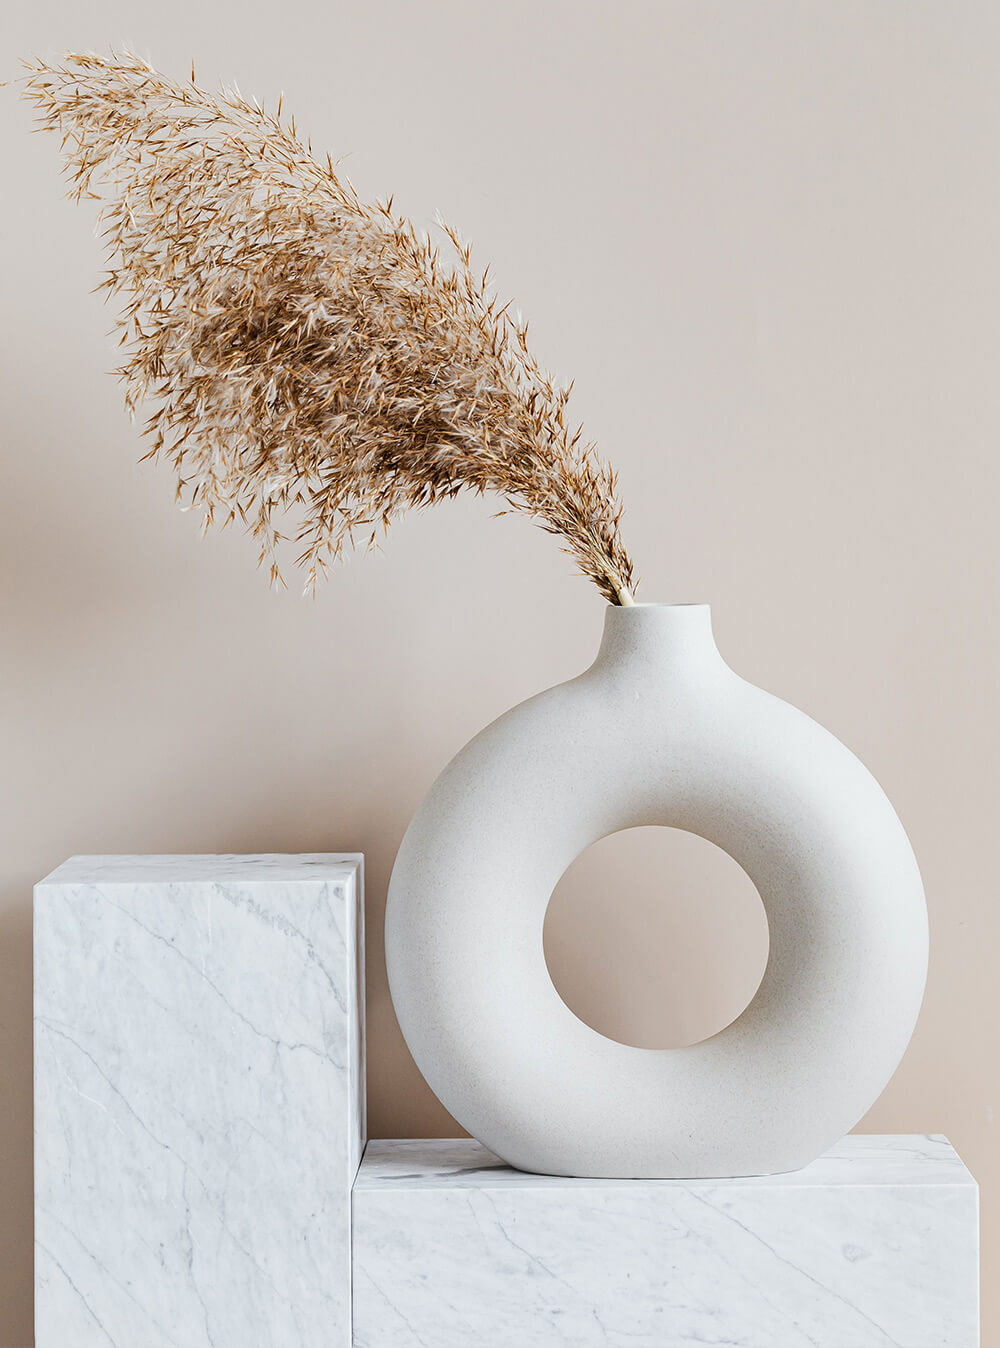 Ceramic Vase with Pampas Grass